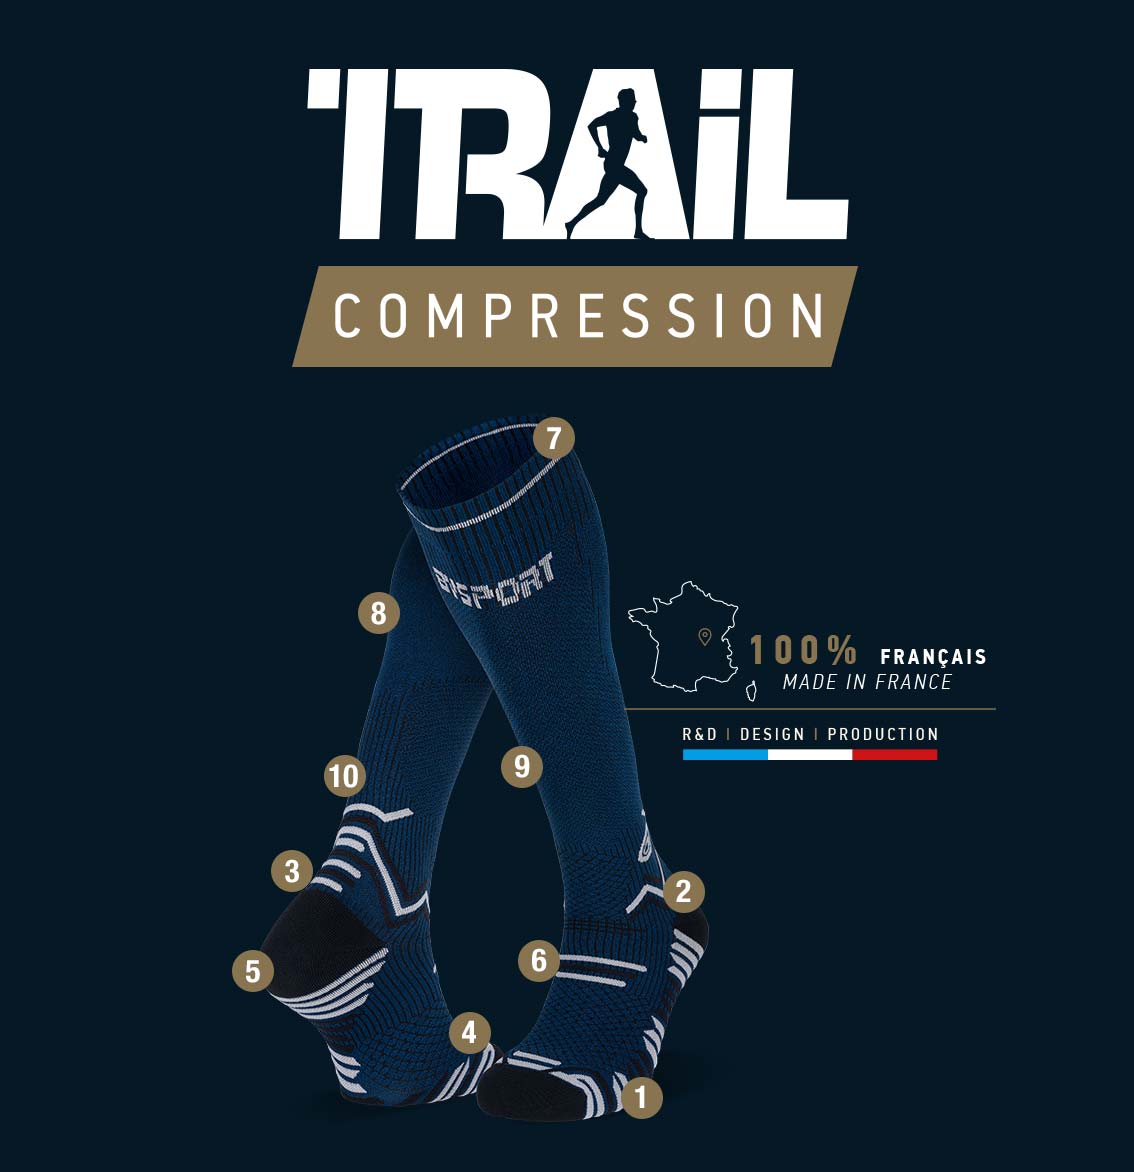 Calze_Trail_compresssion_blu-nero